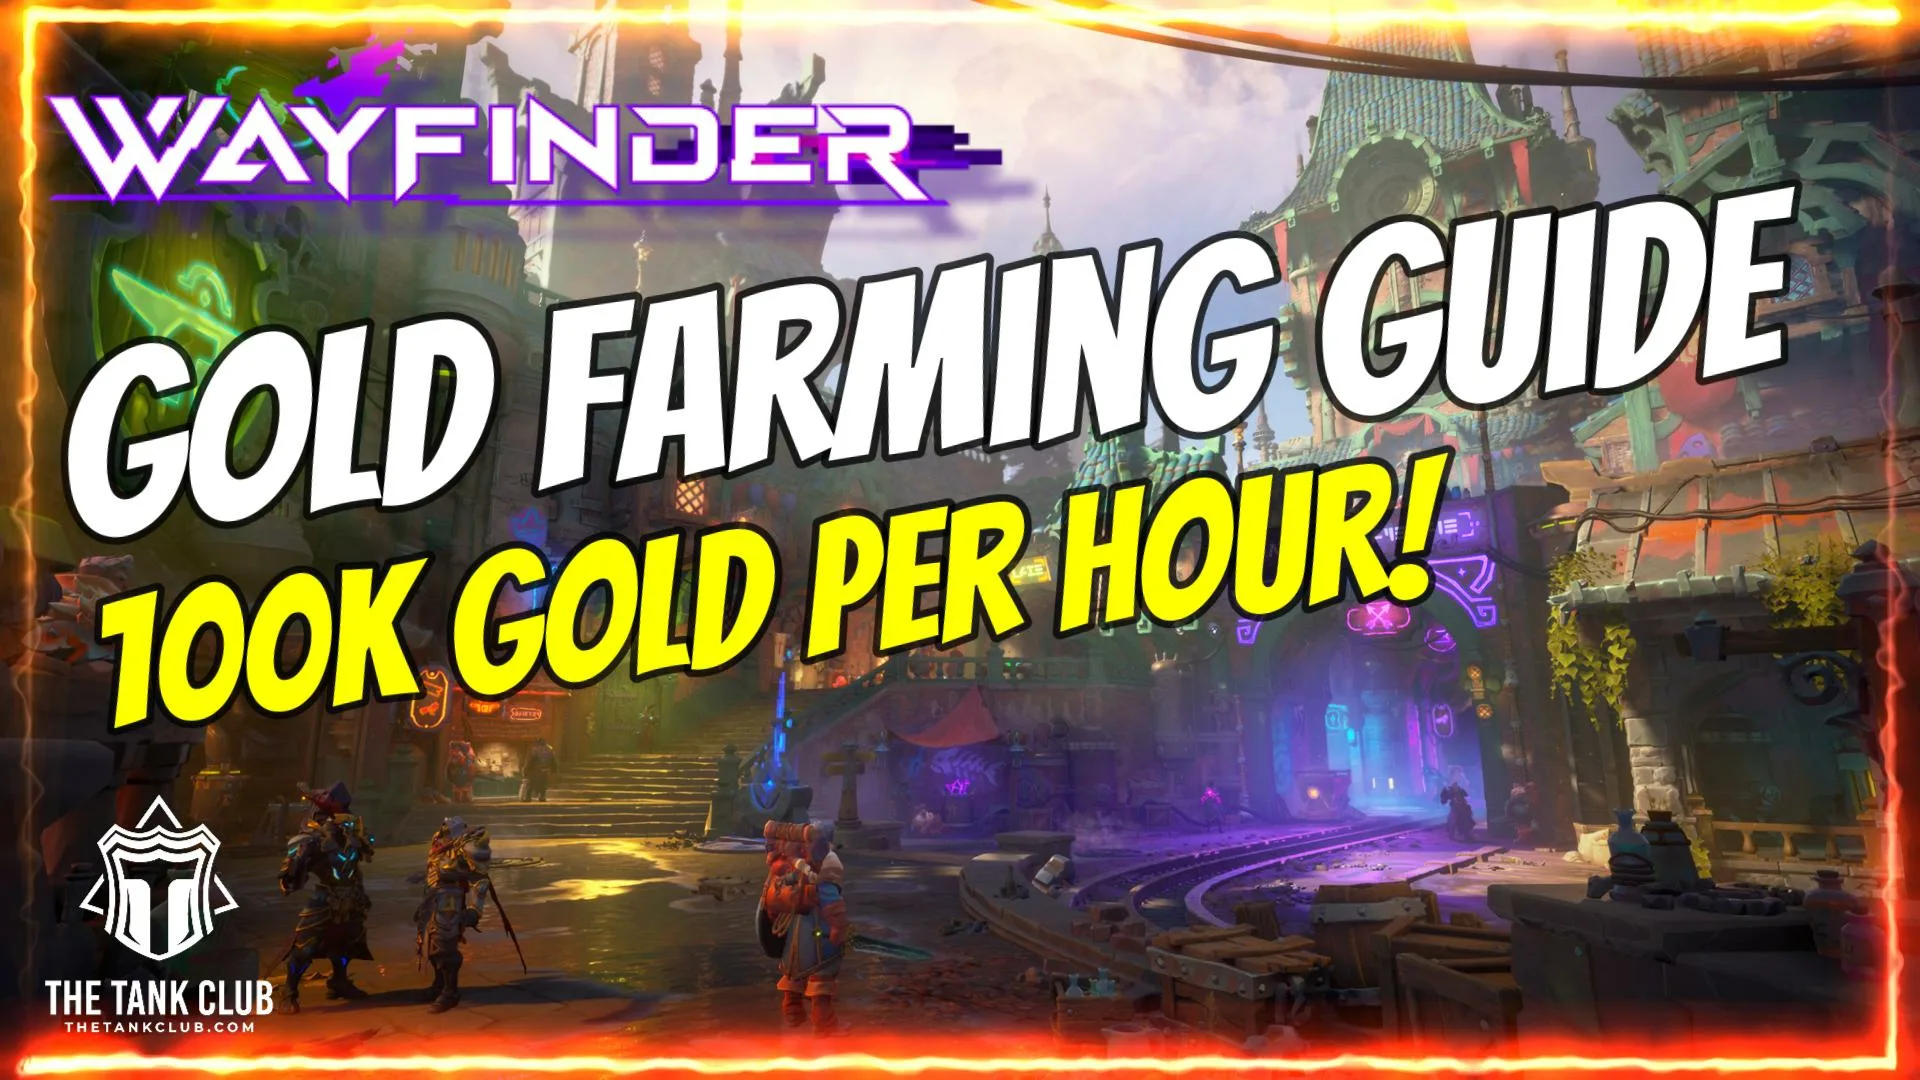 Wayfinder Gold Farming Guide